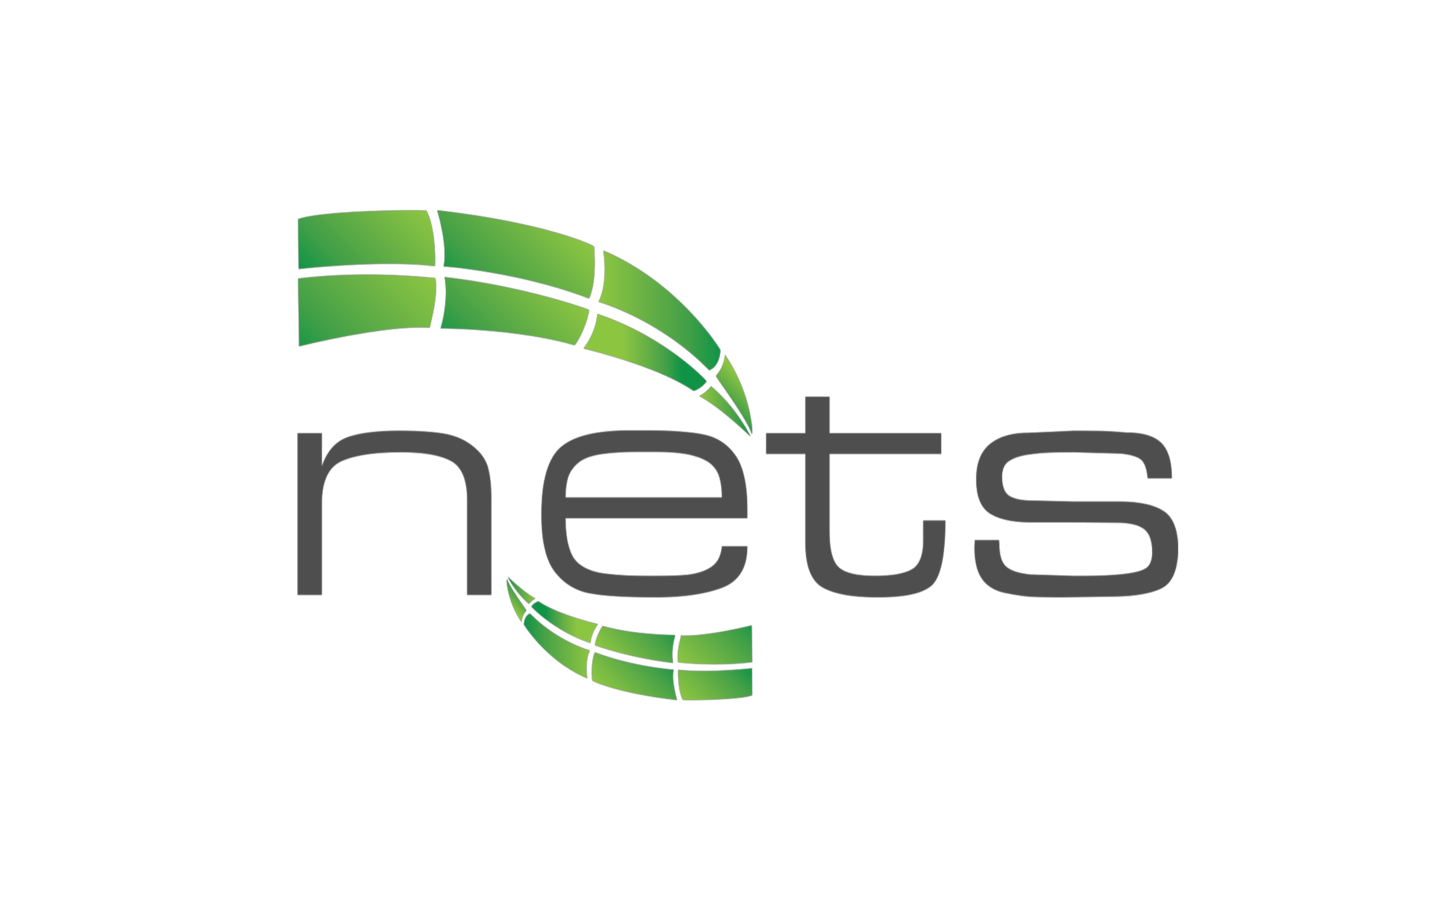 NETS International